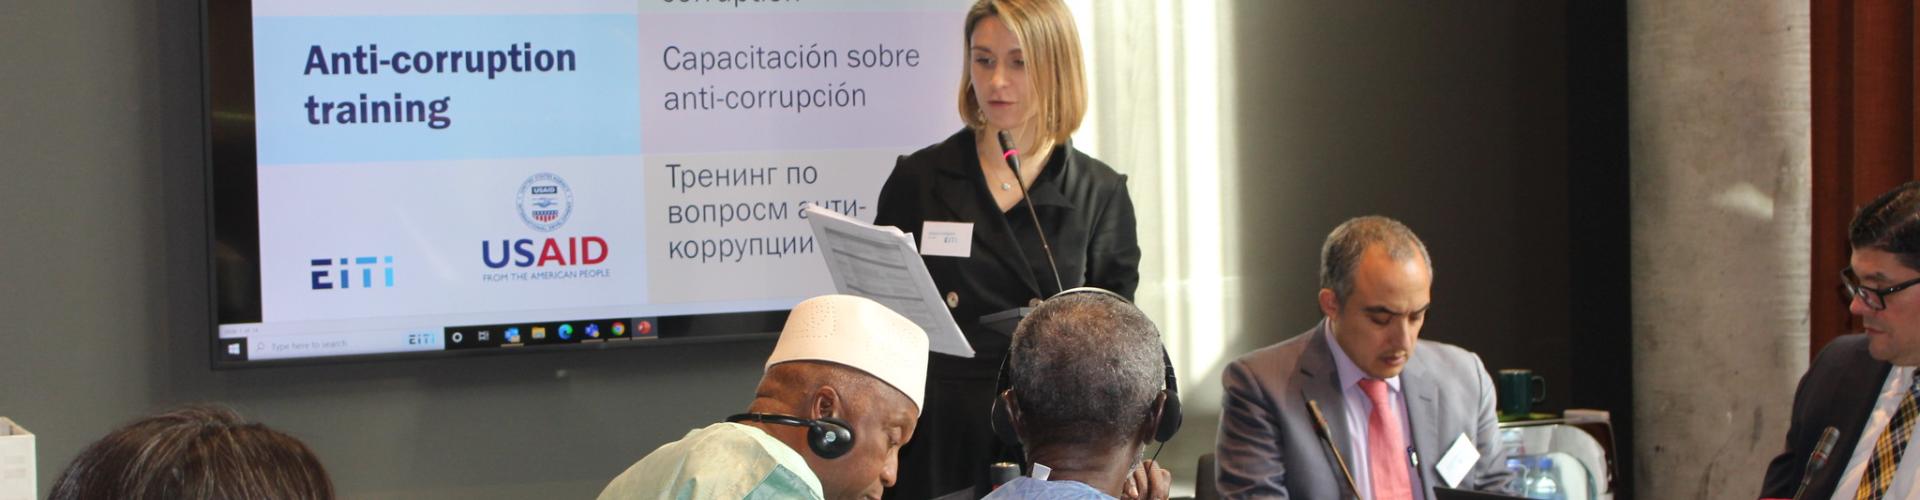 EITI anti-corruption training in Oslo, Norway in October 2022